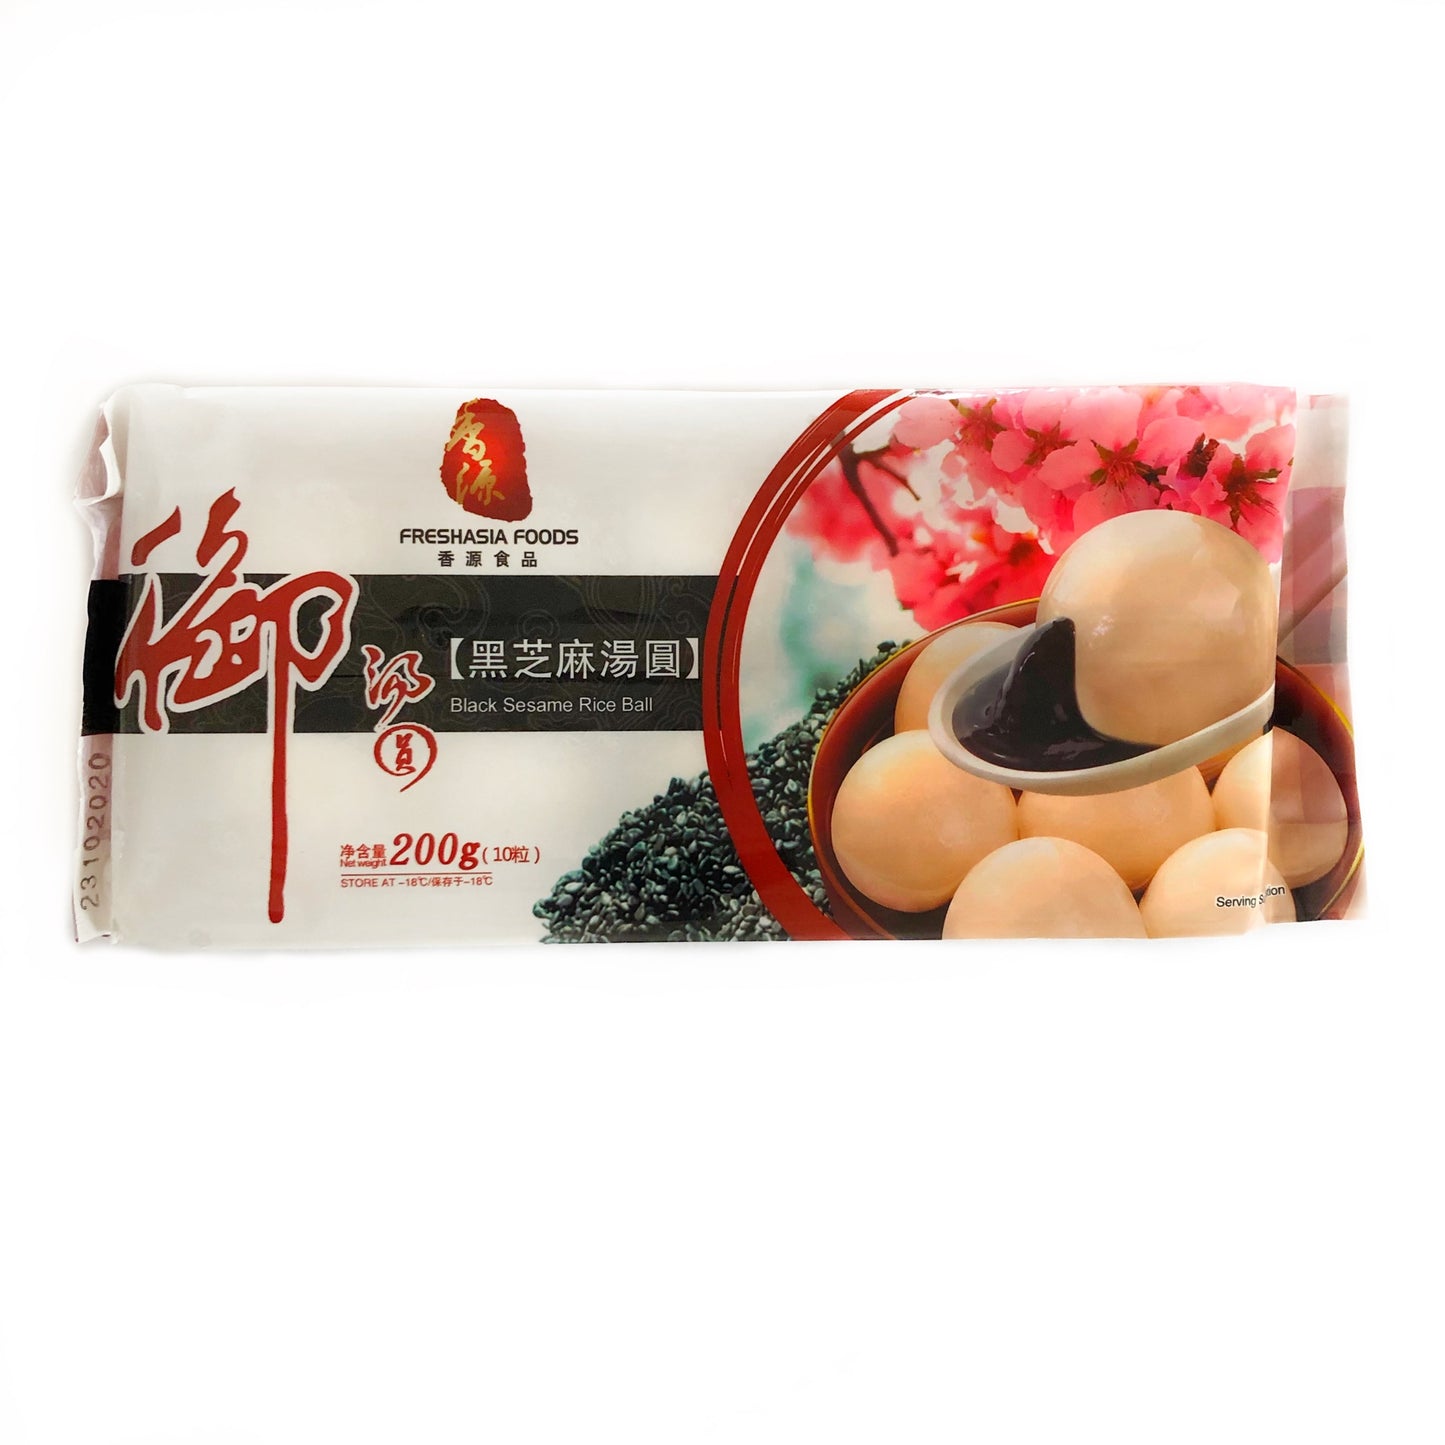 Fresh Asia Frozen Black Sesame Rice Ball香源黑芝麻湯圓 Che Troi Nuoc Nhan Me Den Dong Lanh  200g x 1